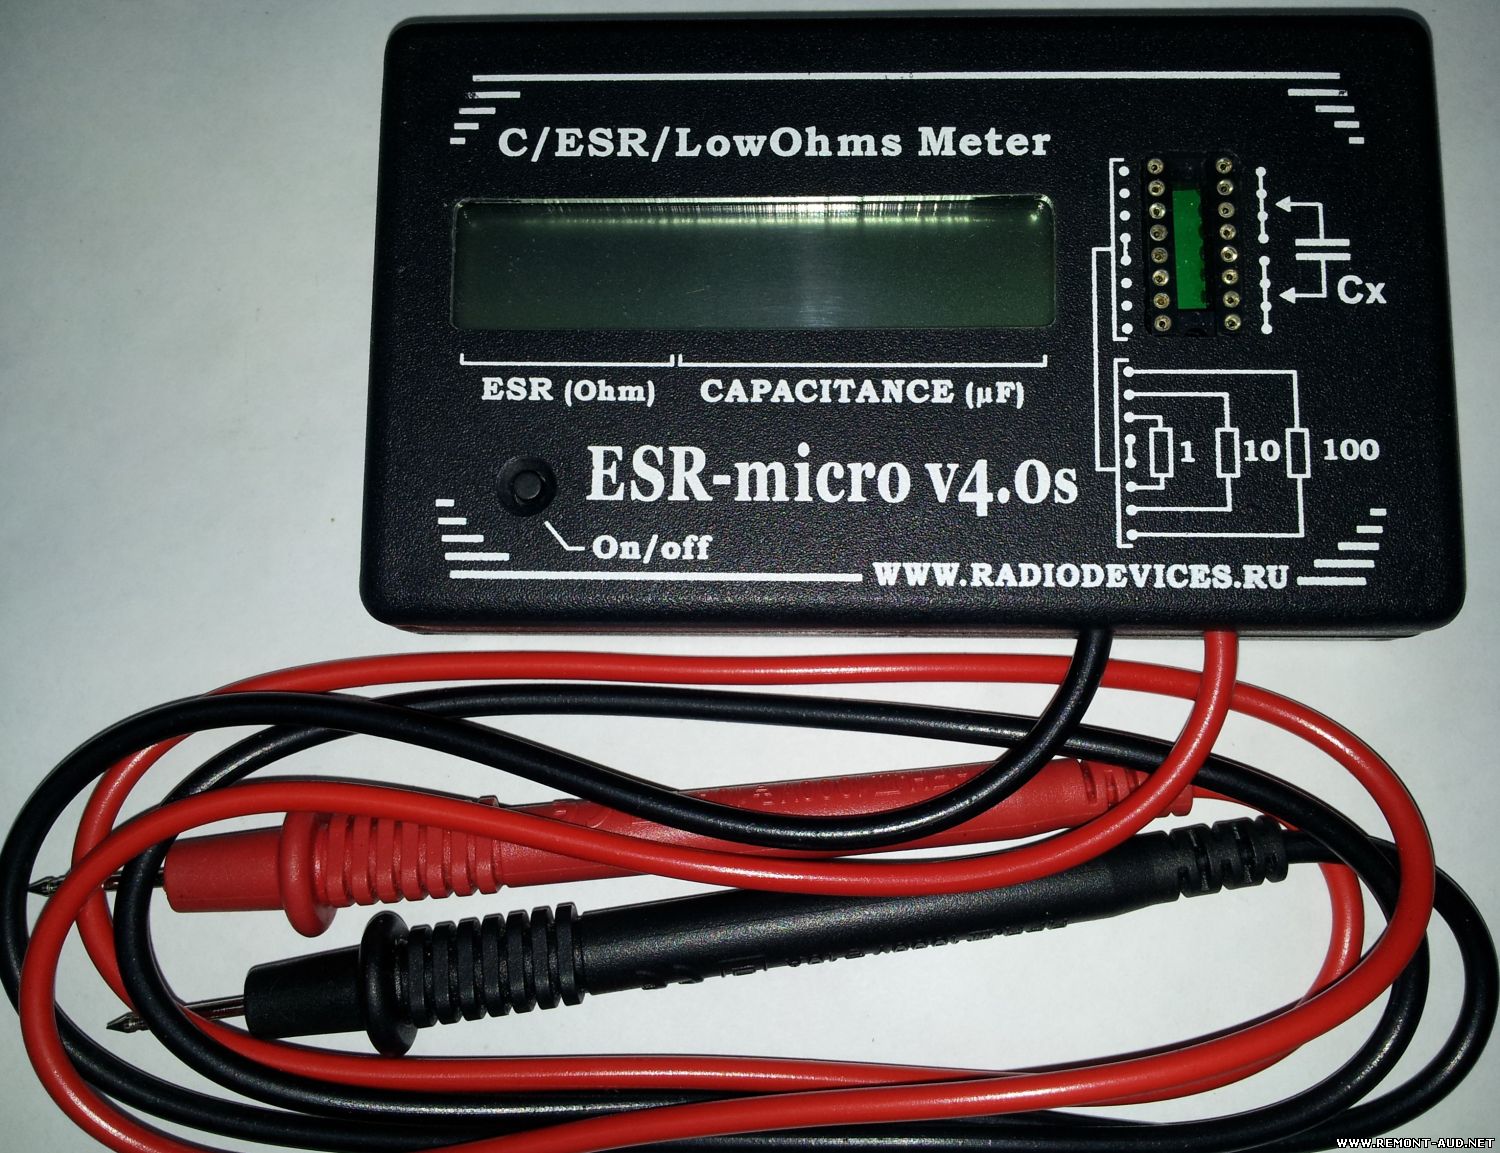 Микро v. Прибор ESR Micro v4 0s. ESR-Micro v4.0s. ESR-Micro v1.1. ESR-Micro v4.0s плата.